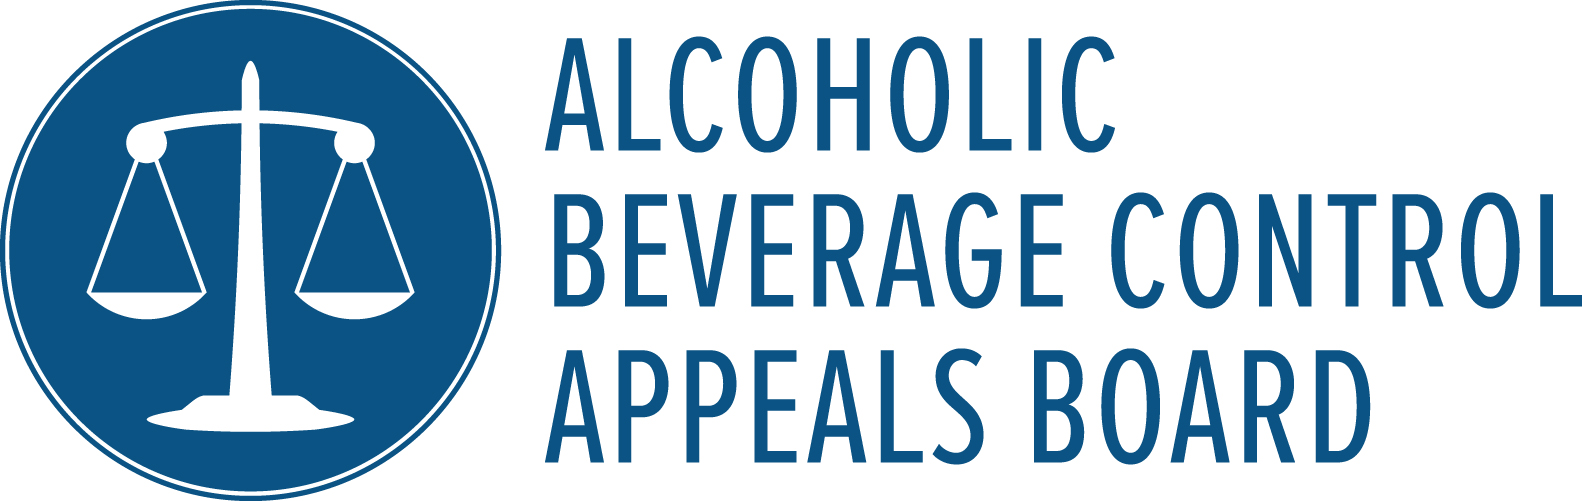 Alcoholic Beverage Control Appeals Board logo